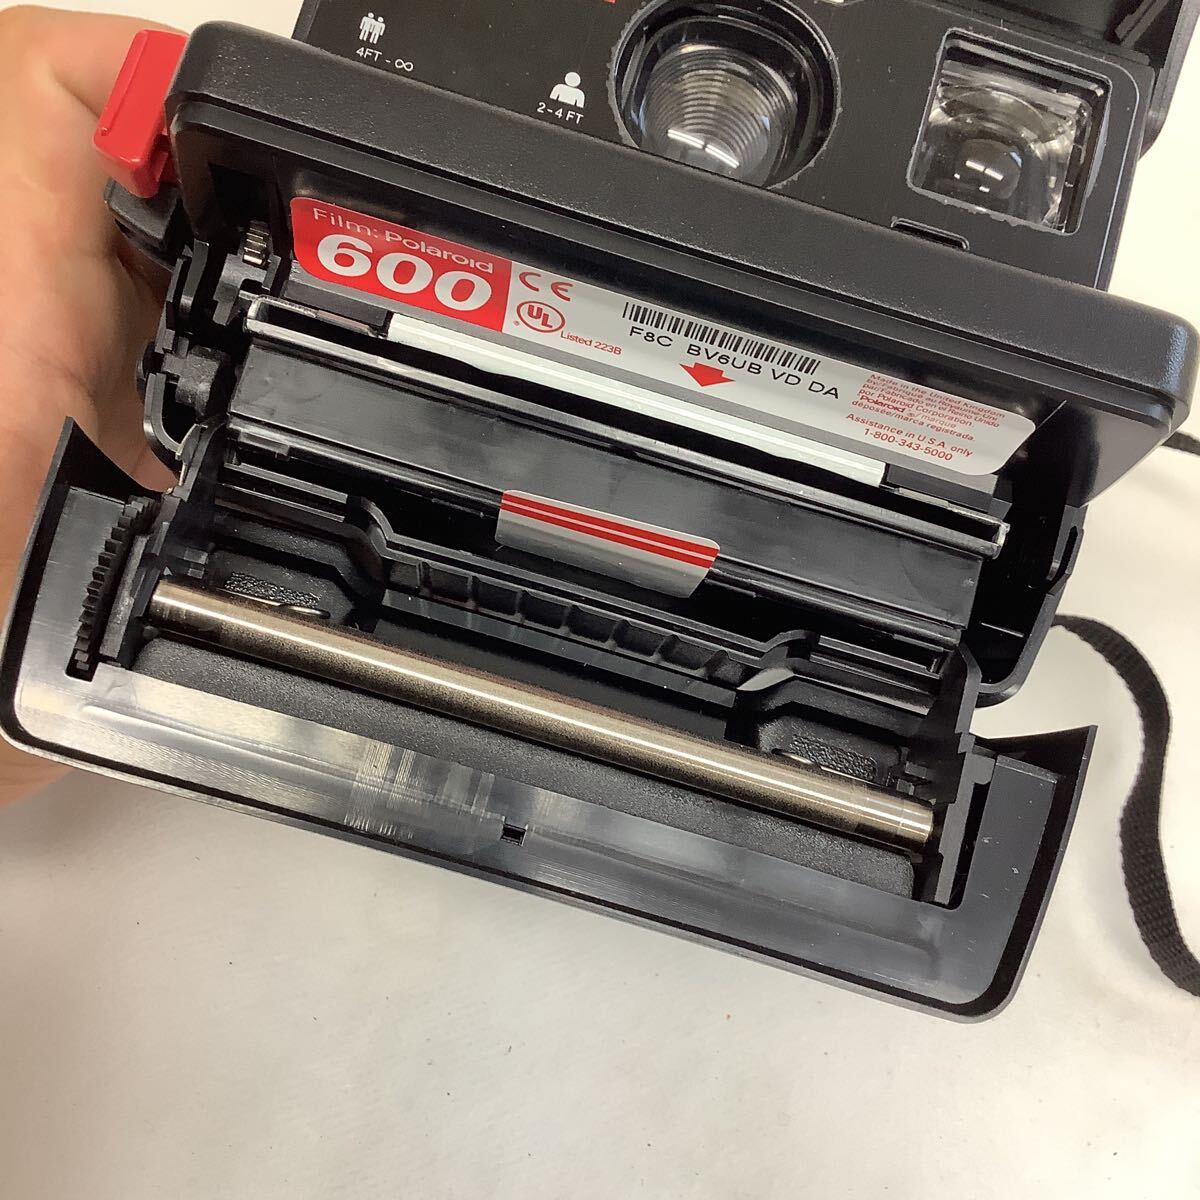 0.NI008-A12T60[ Saitama departure ]Polaroid Polaroid camera SPIRIT600CL close-up lens built-in strobo built-in operation not yet verification 